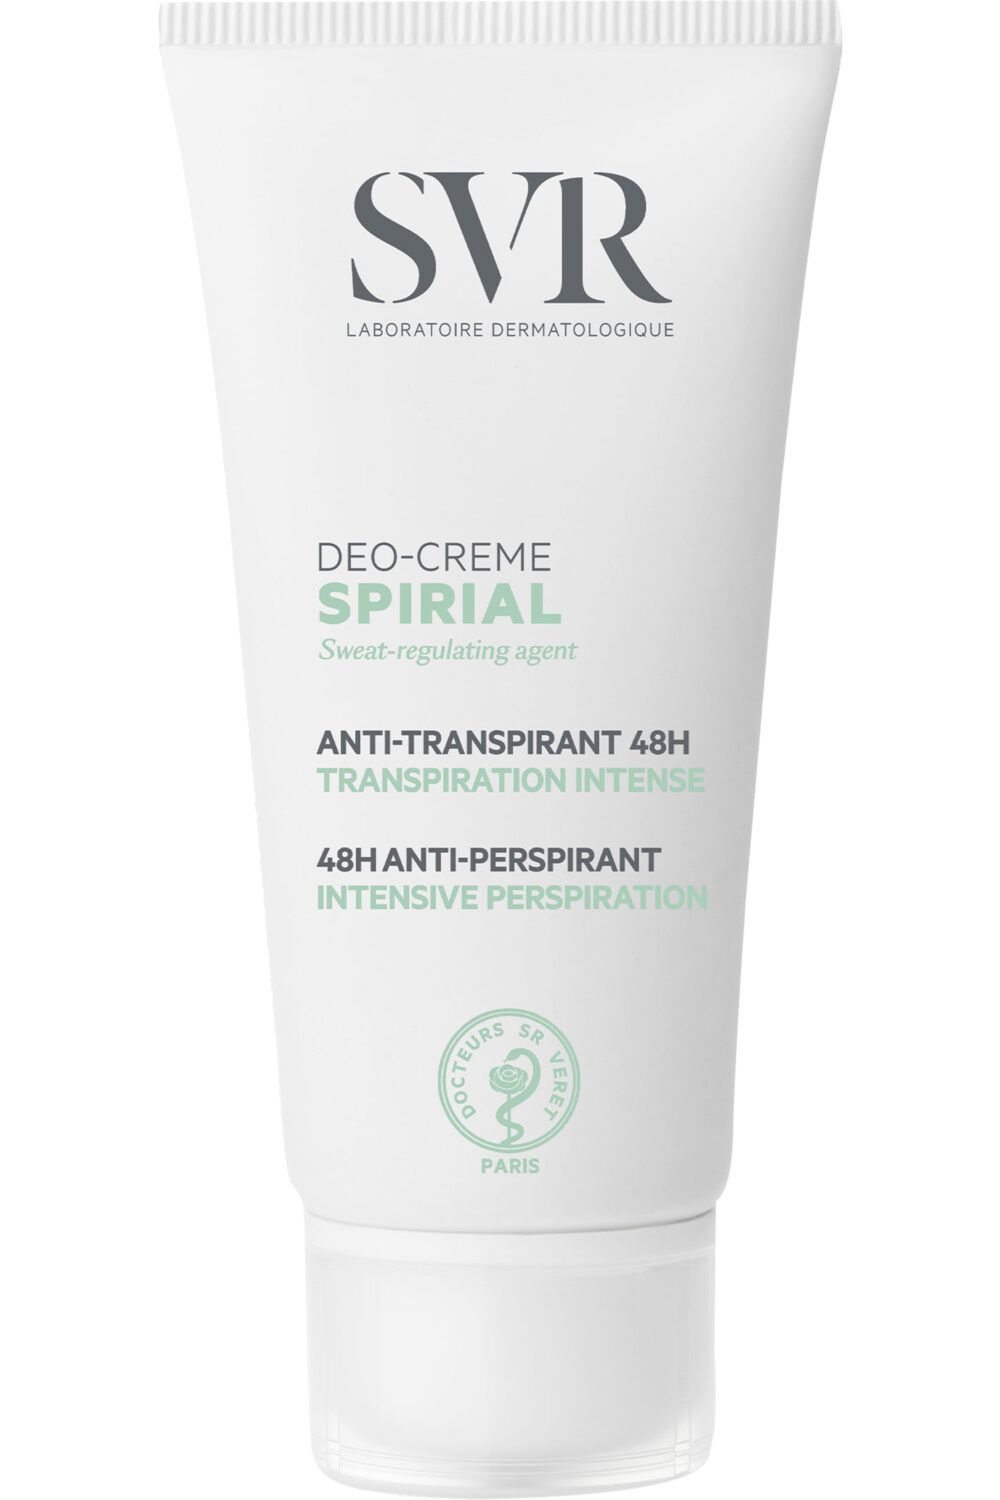 SVR - Déo-crème anti-transpirant 48h multi-zones Spirial